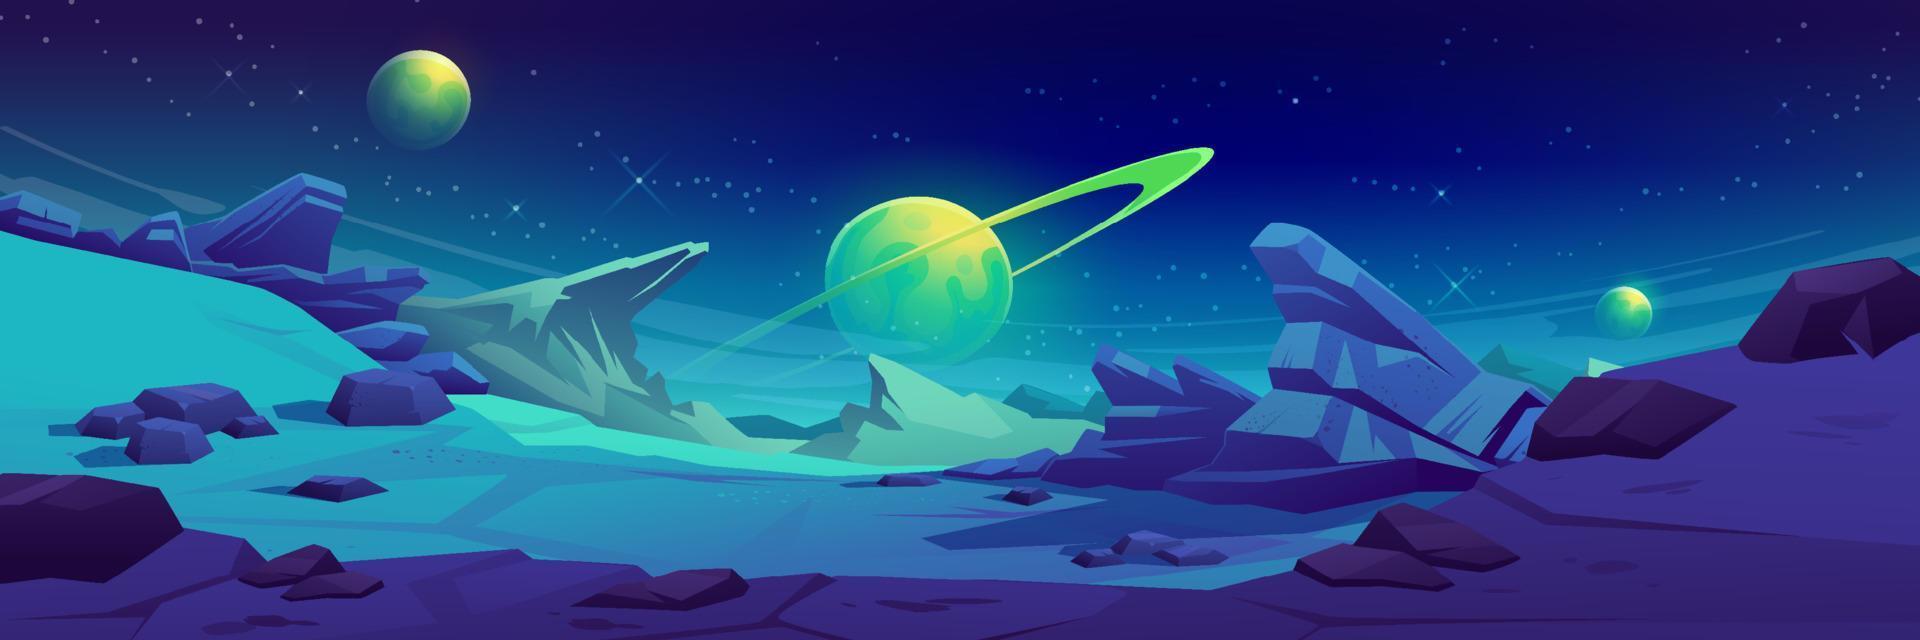 Night mars surface, alien planet landscape vector